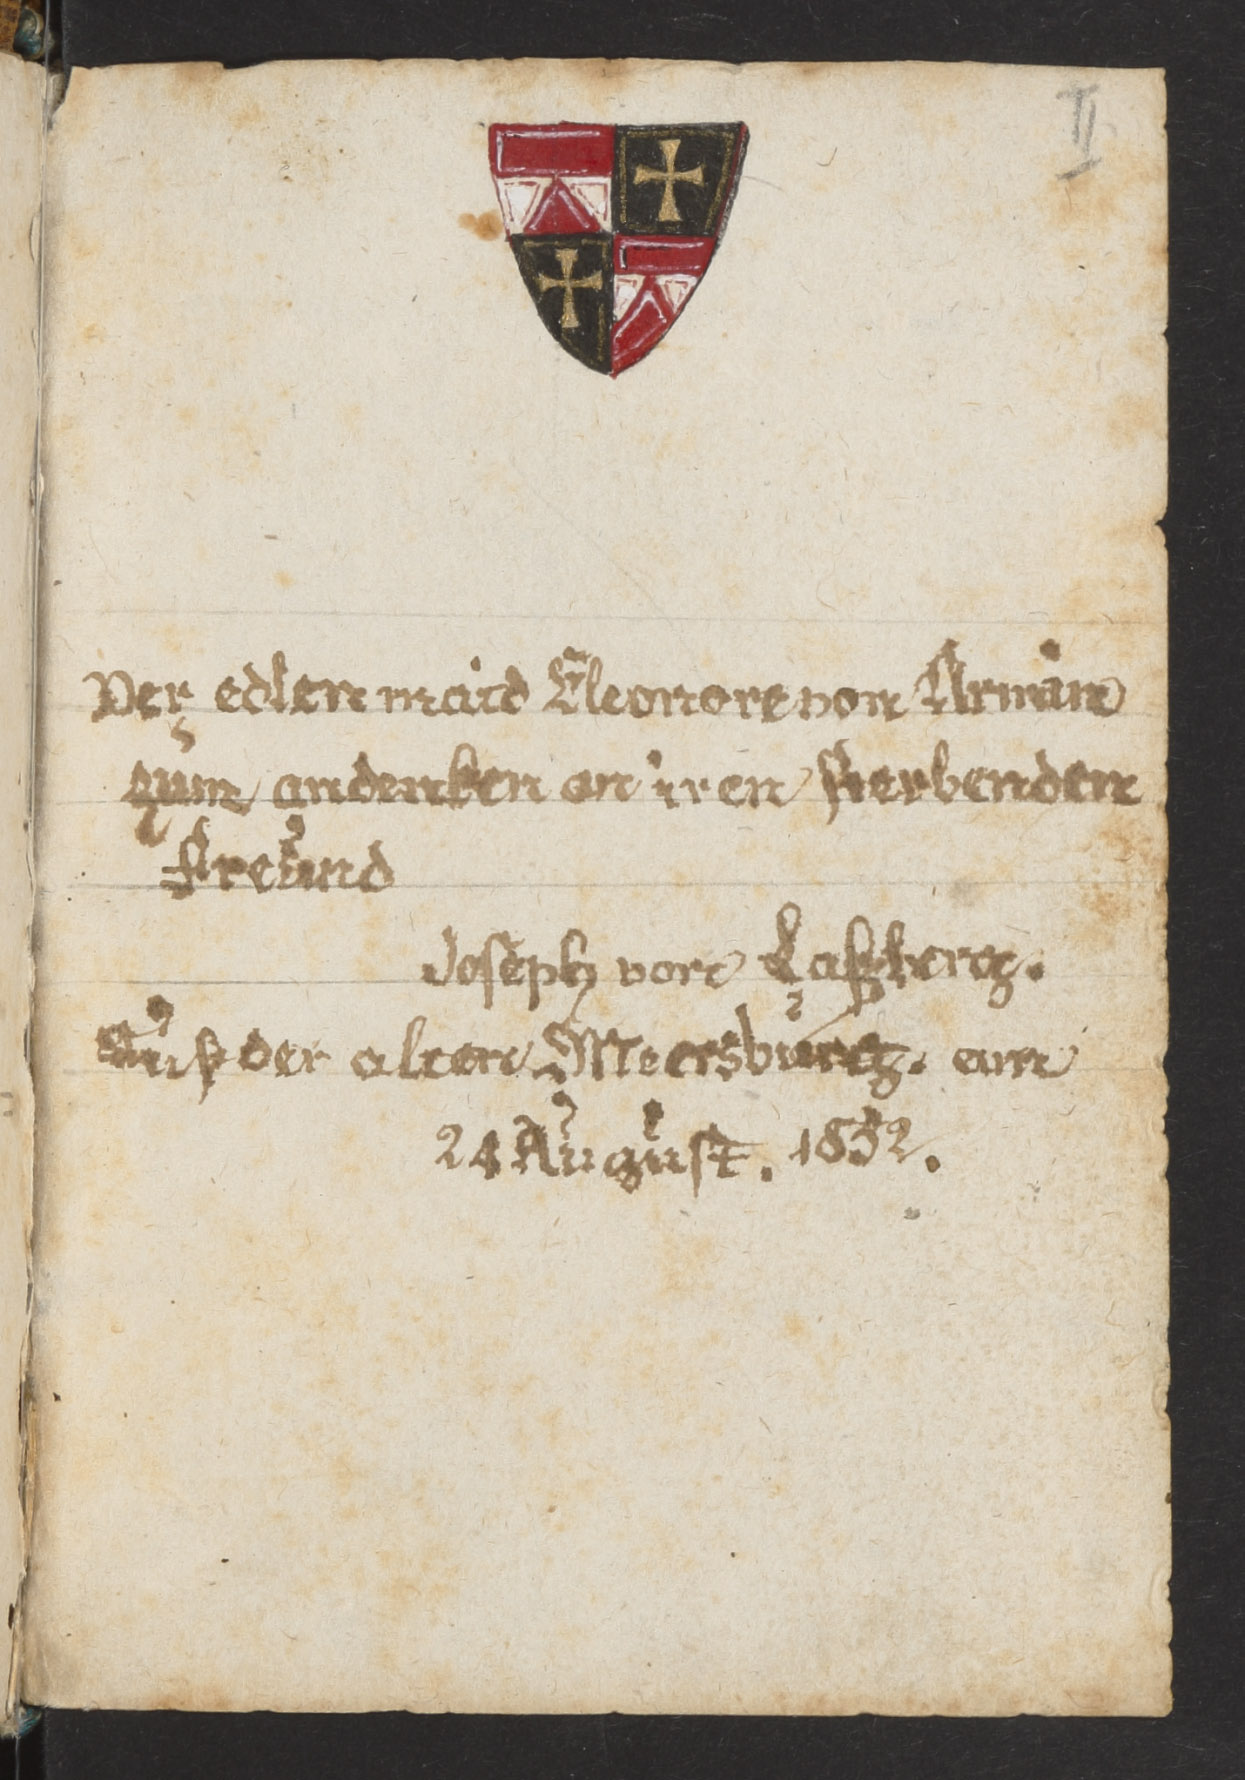 Abb. 6: The opening folio of SBB PK: Hdschr. 49